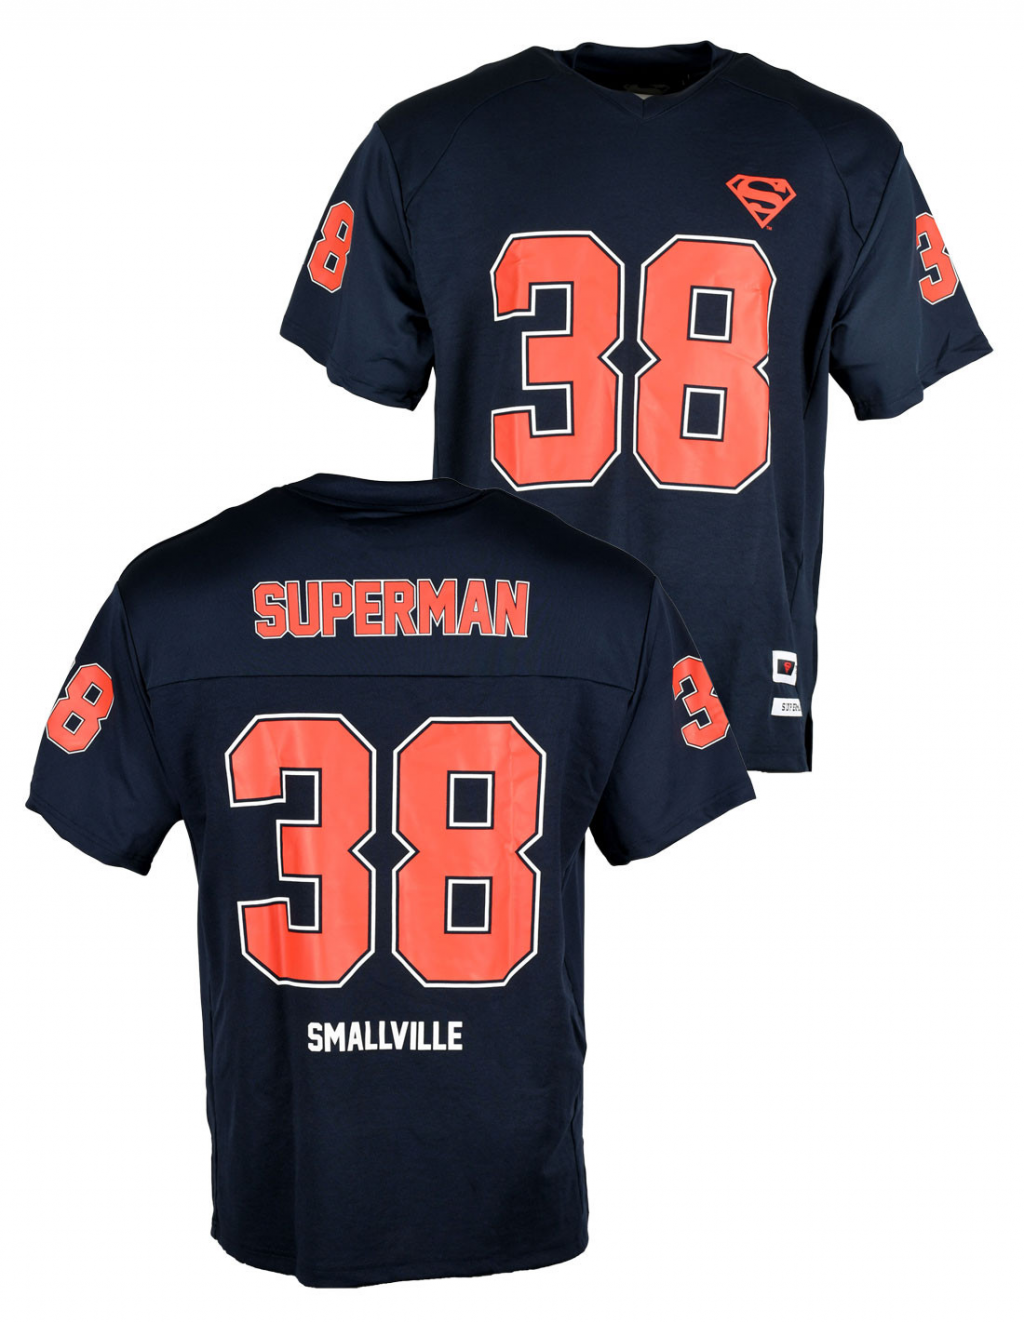 DC COMICS - Superman Smallville - T-Shirt Sports US Replica unisex (S)